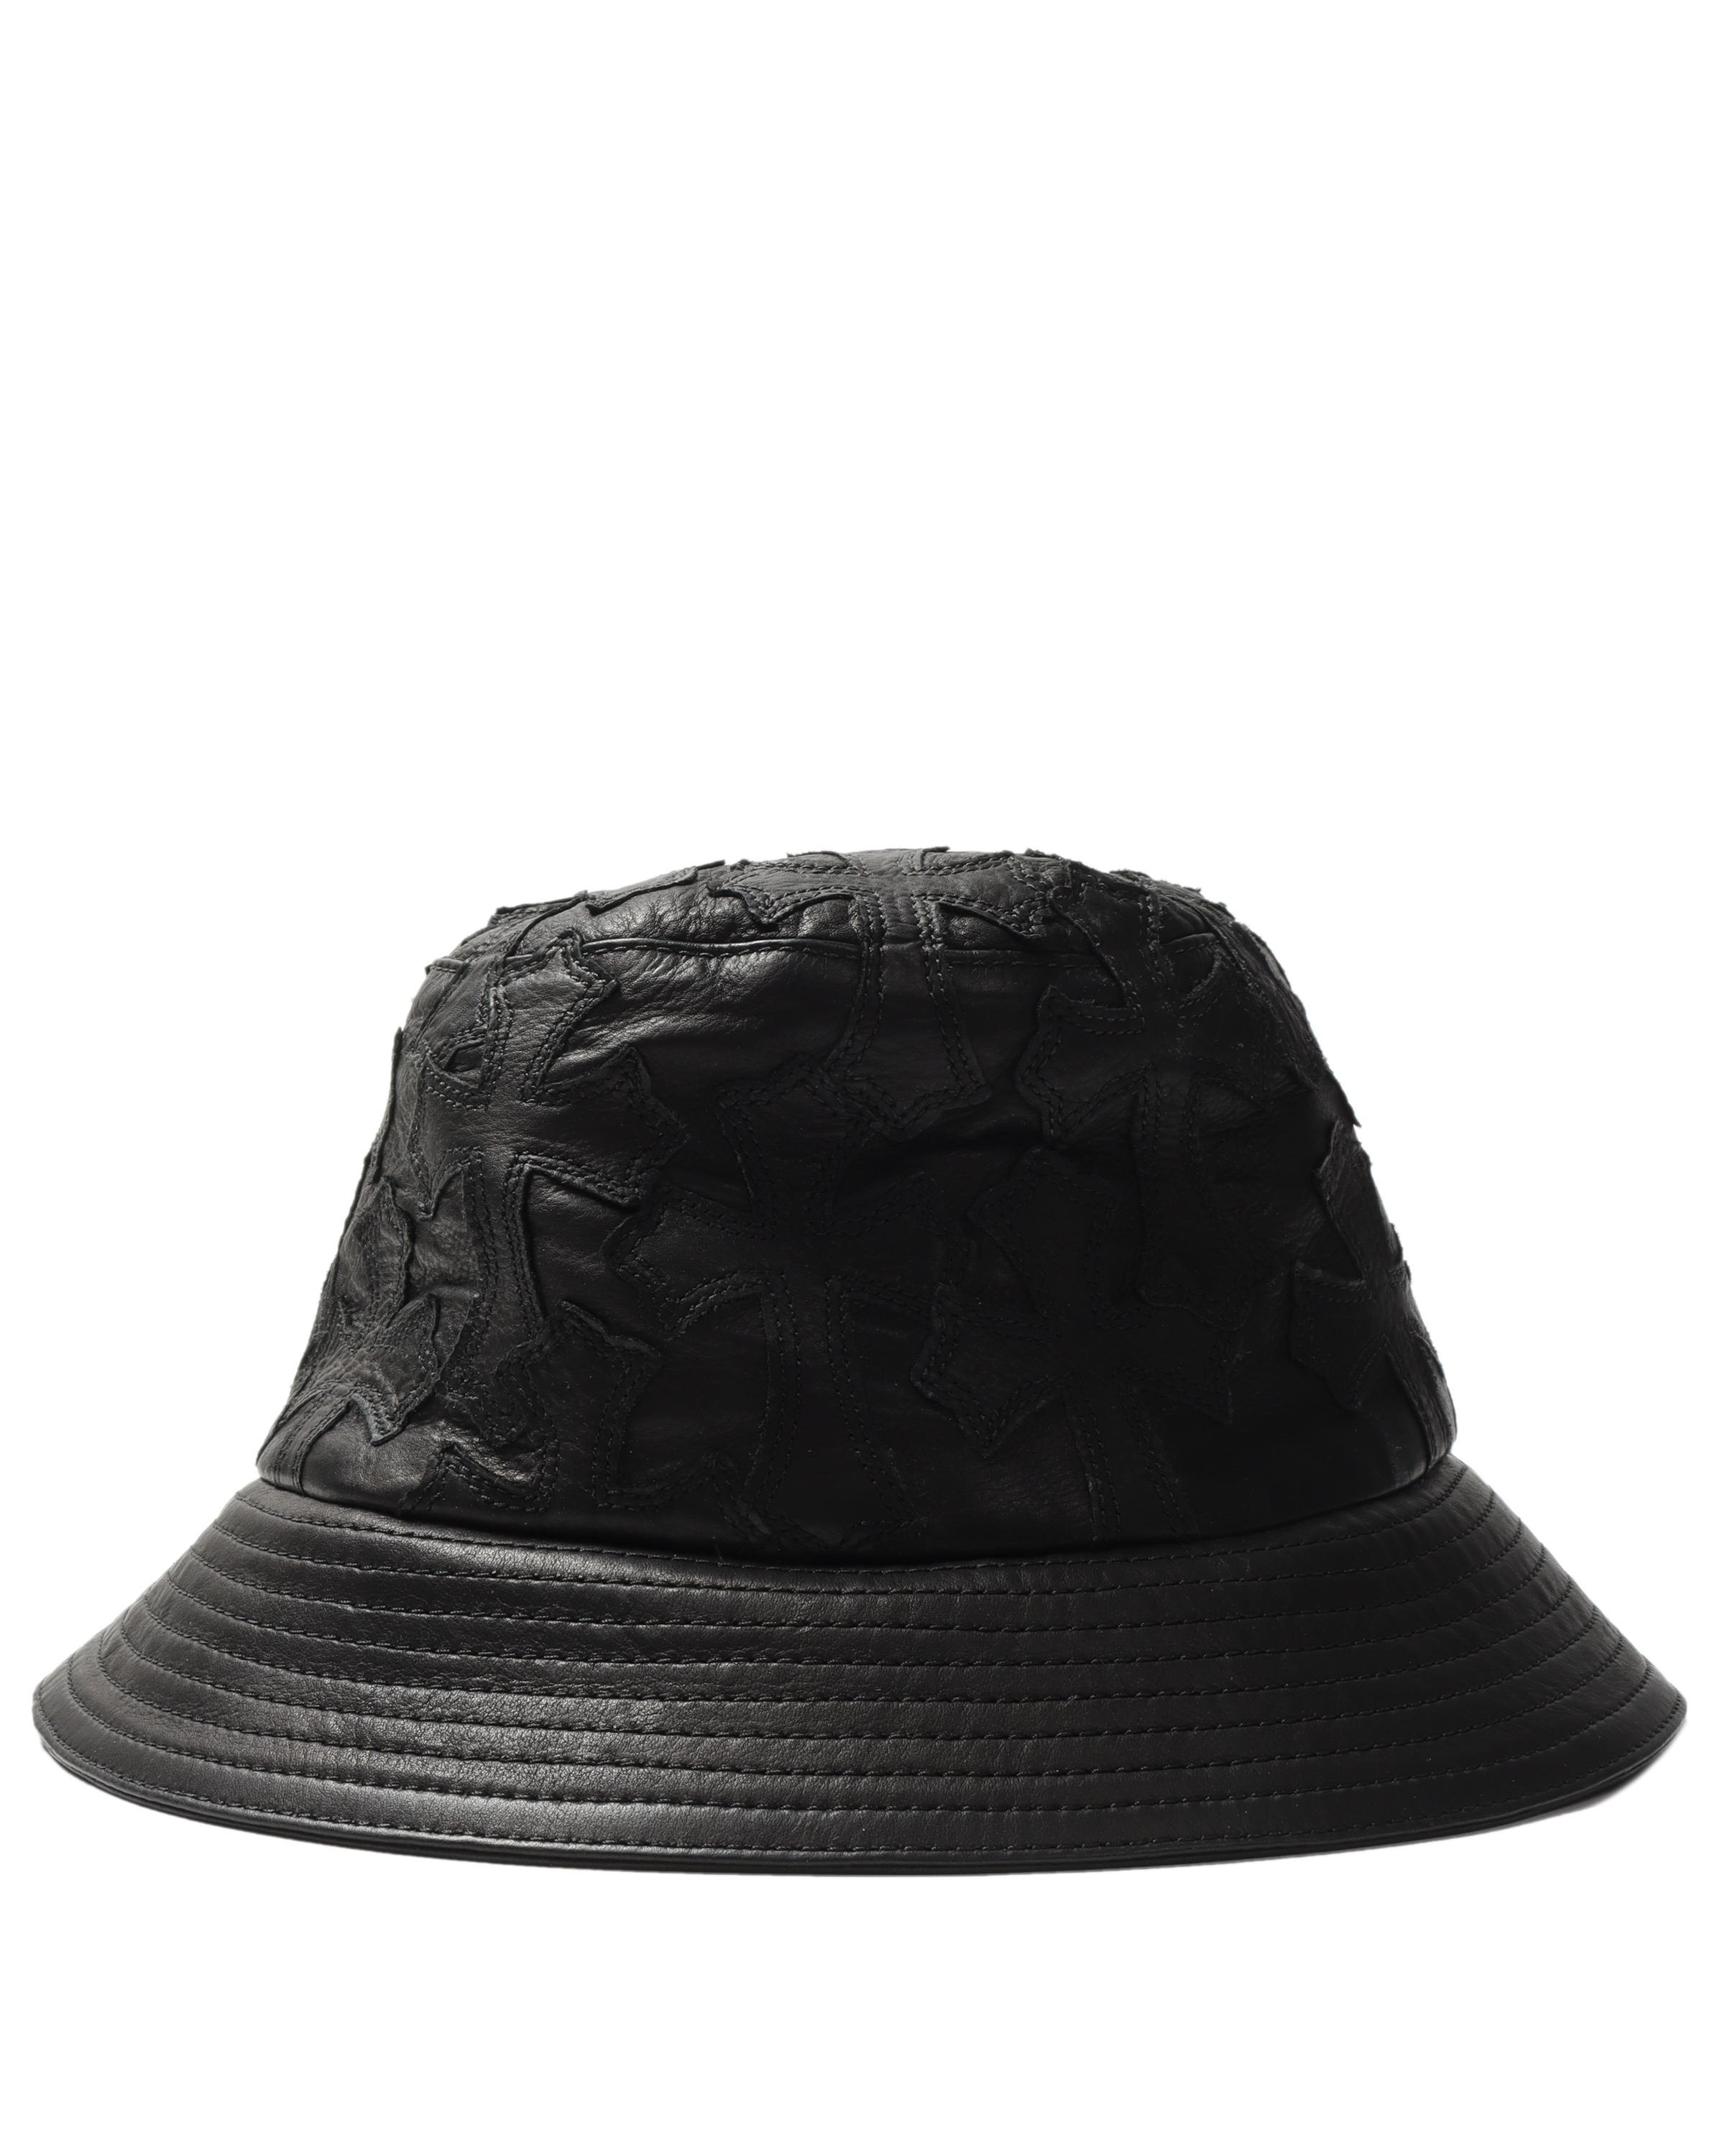 Leather Cross Patch Bucket Hat